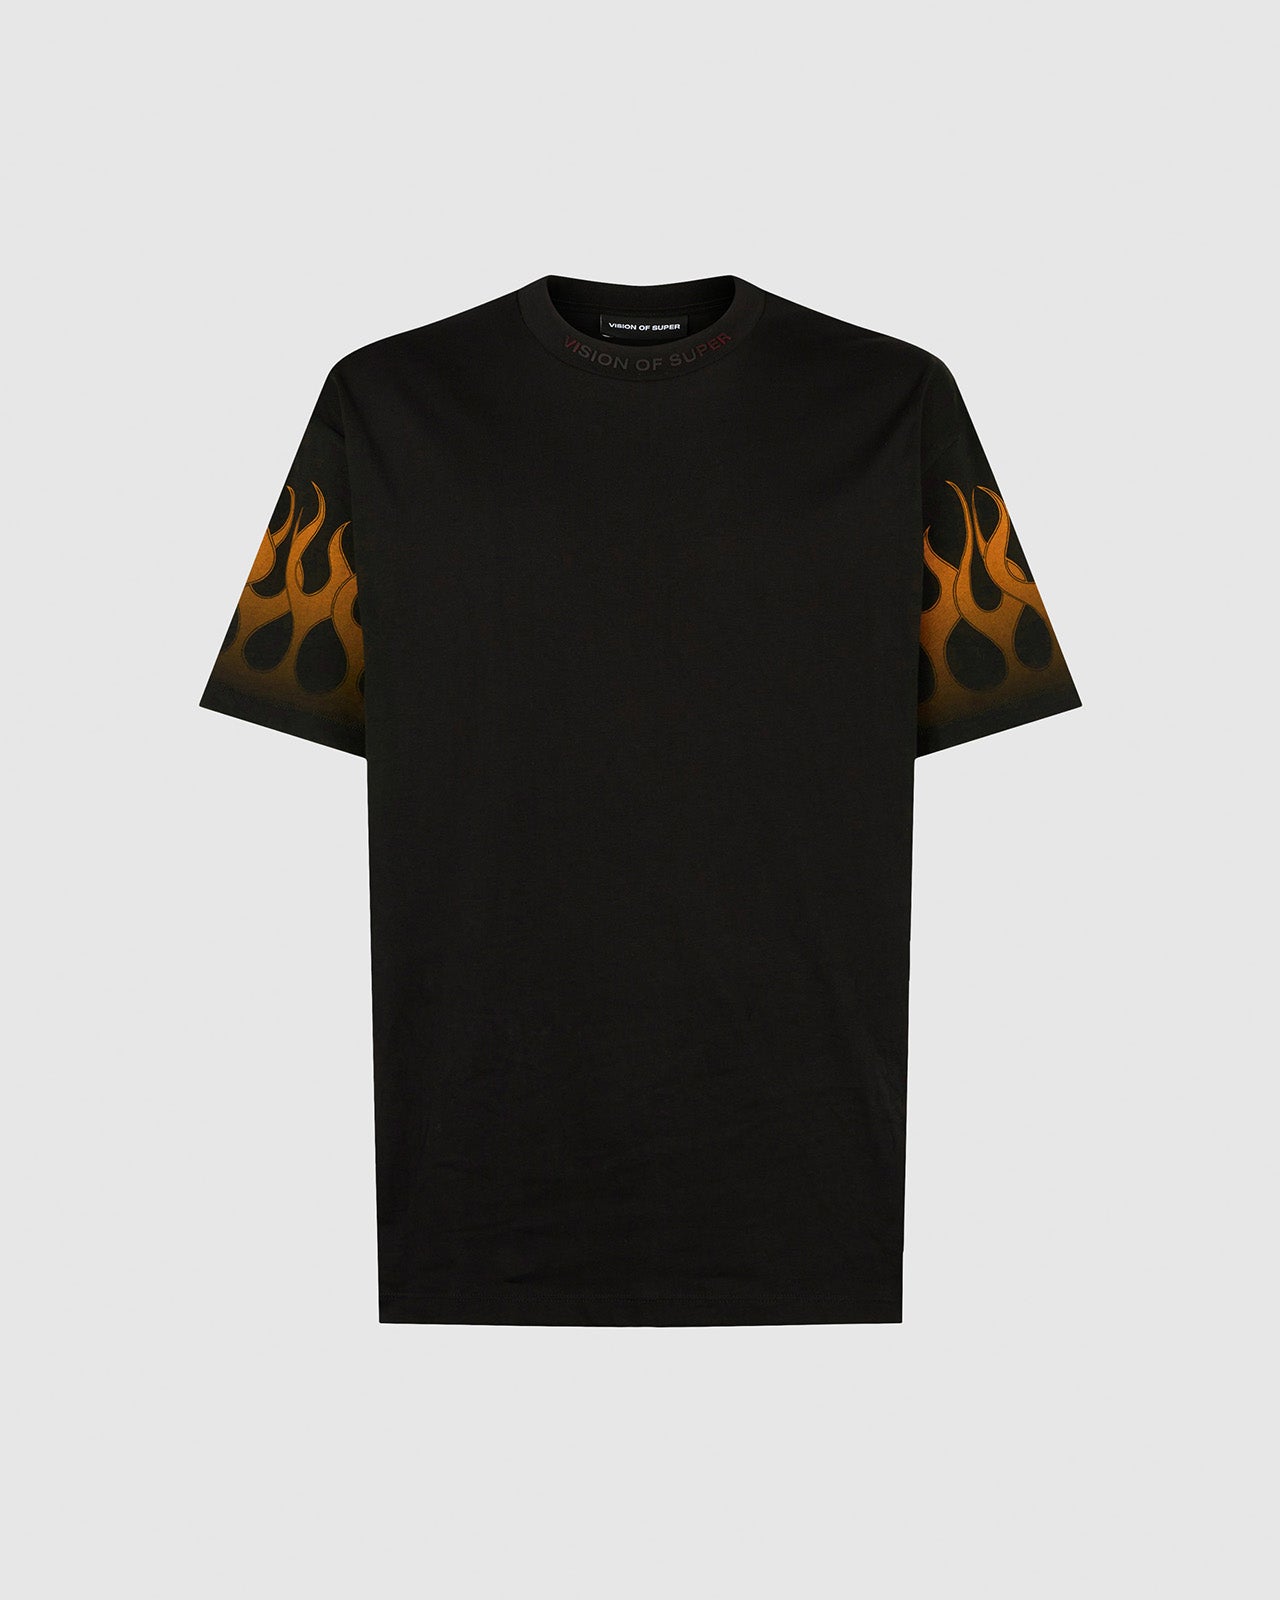 Black T-shirt with Orange Flames